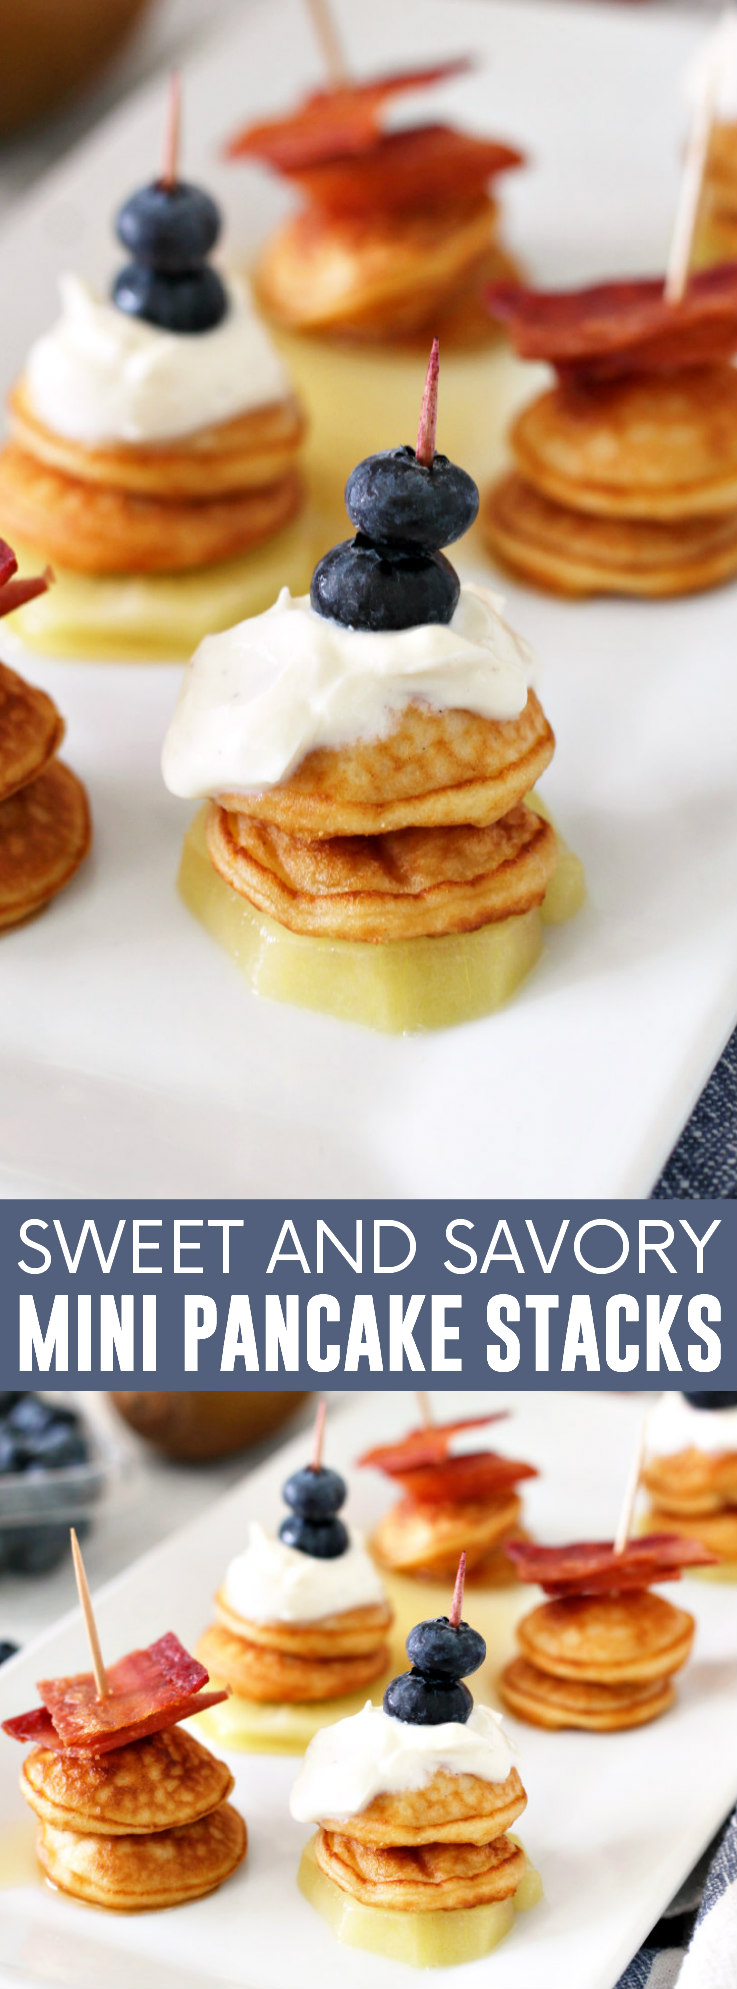 Sweet and Savory Mini Pancake Stacks pinnable image.